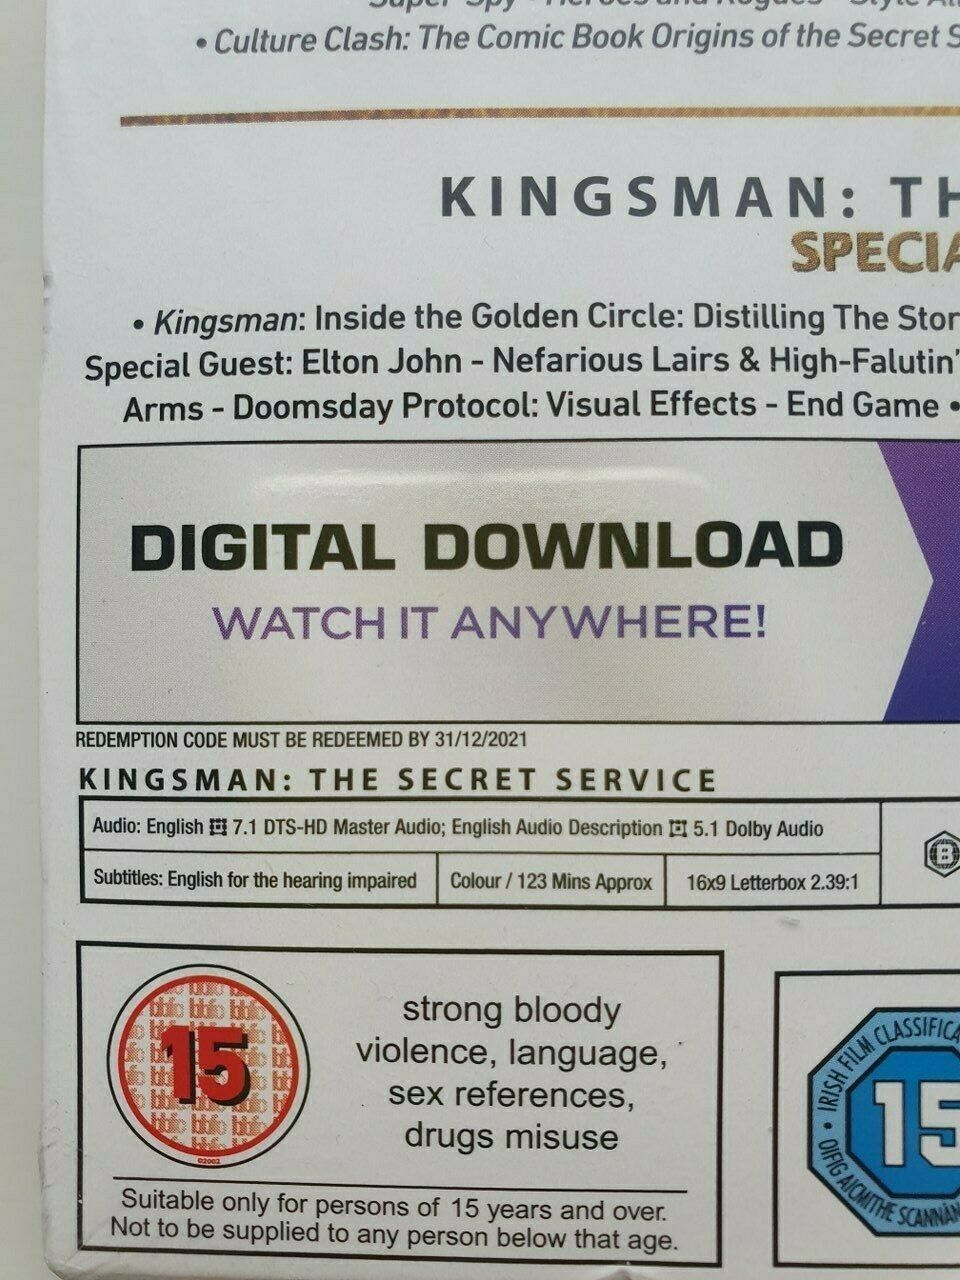 5039036082372 Kingsman - 2-movie Collection Blu-ray + Digital 2018 BOX SET NEW SEALED